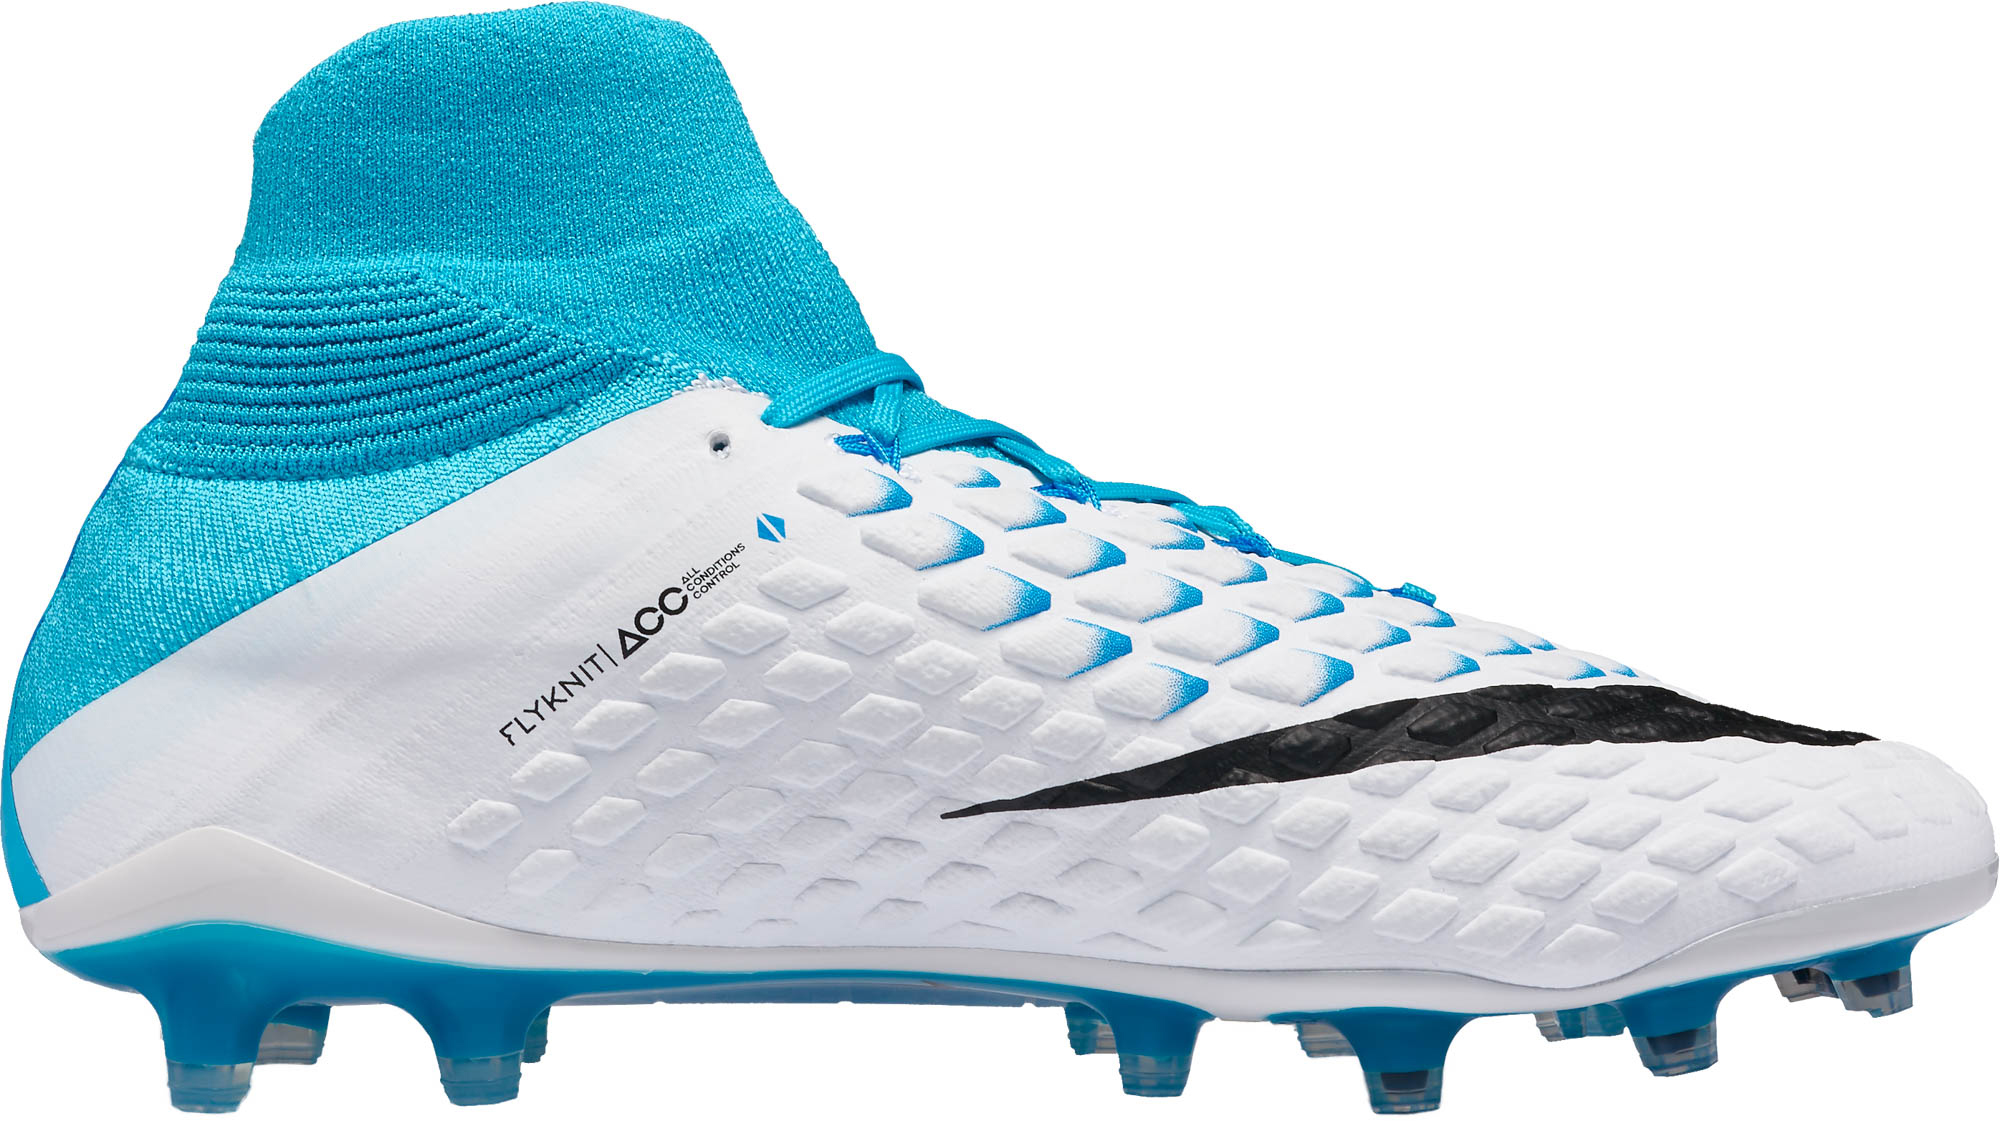 Nike Phantom III DF FG Soccer Cleats White & Photo Blue - Soccer Master